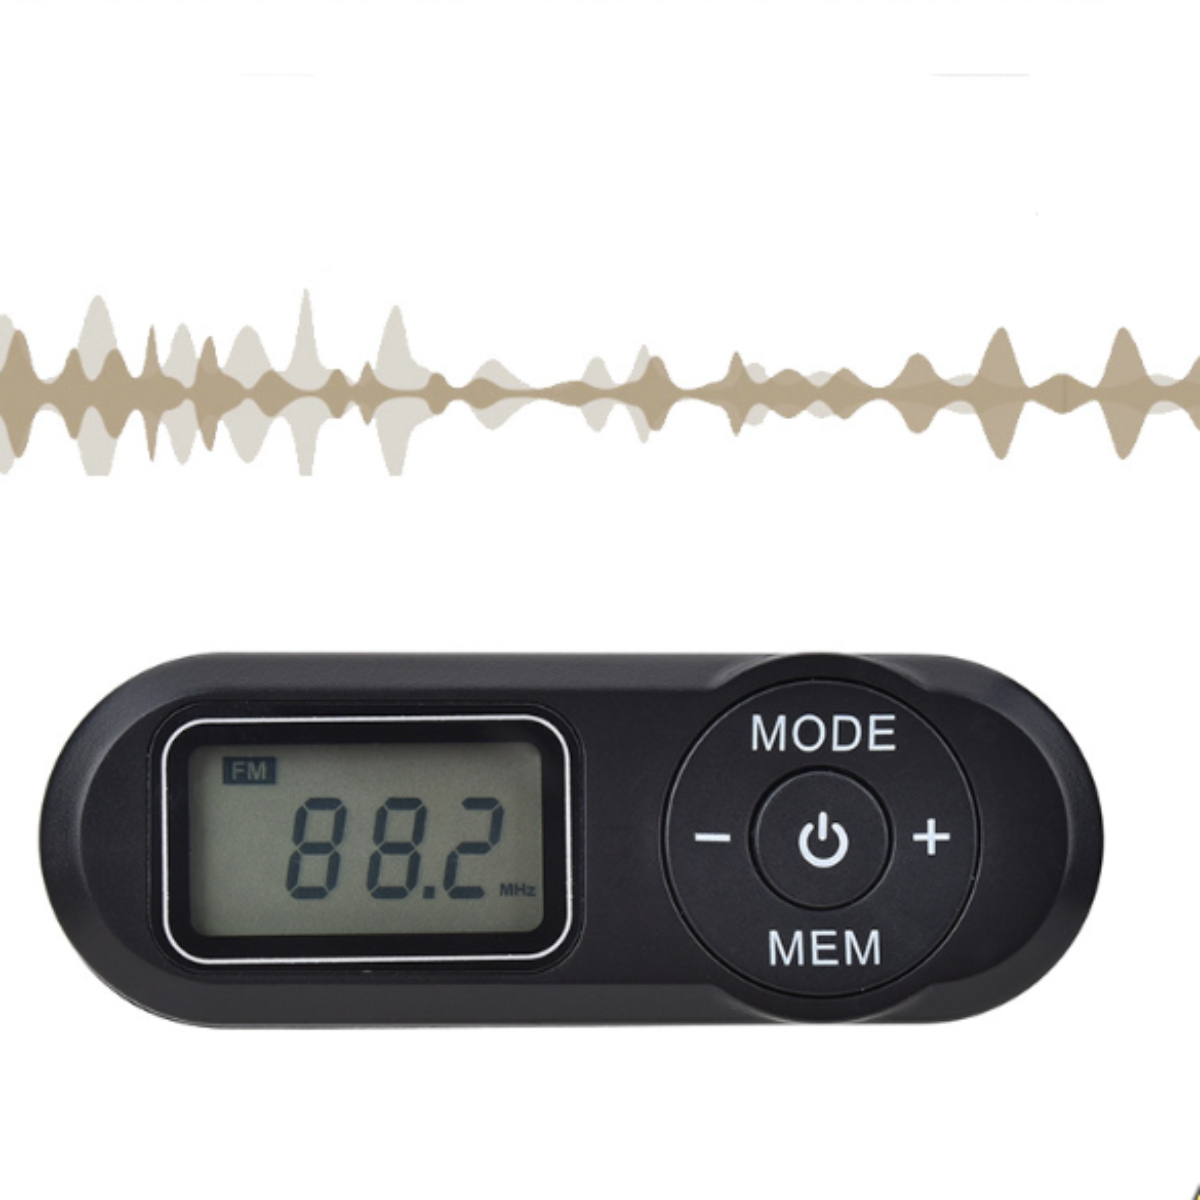 ENBAOXIN Tragbares Digitaldisplay-Funktion Radio, mit Schwarz - FM, FM, FM-Signalempfang Stabiler Radio